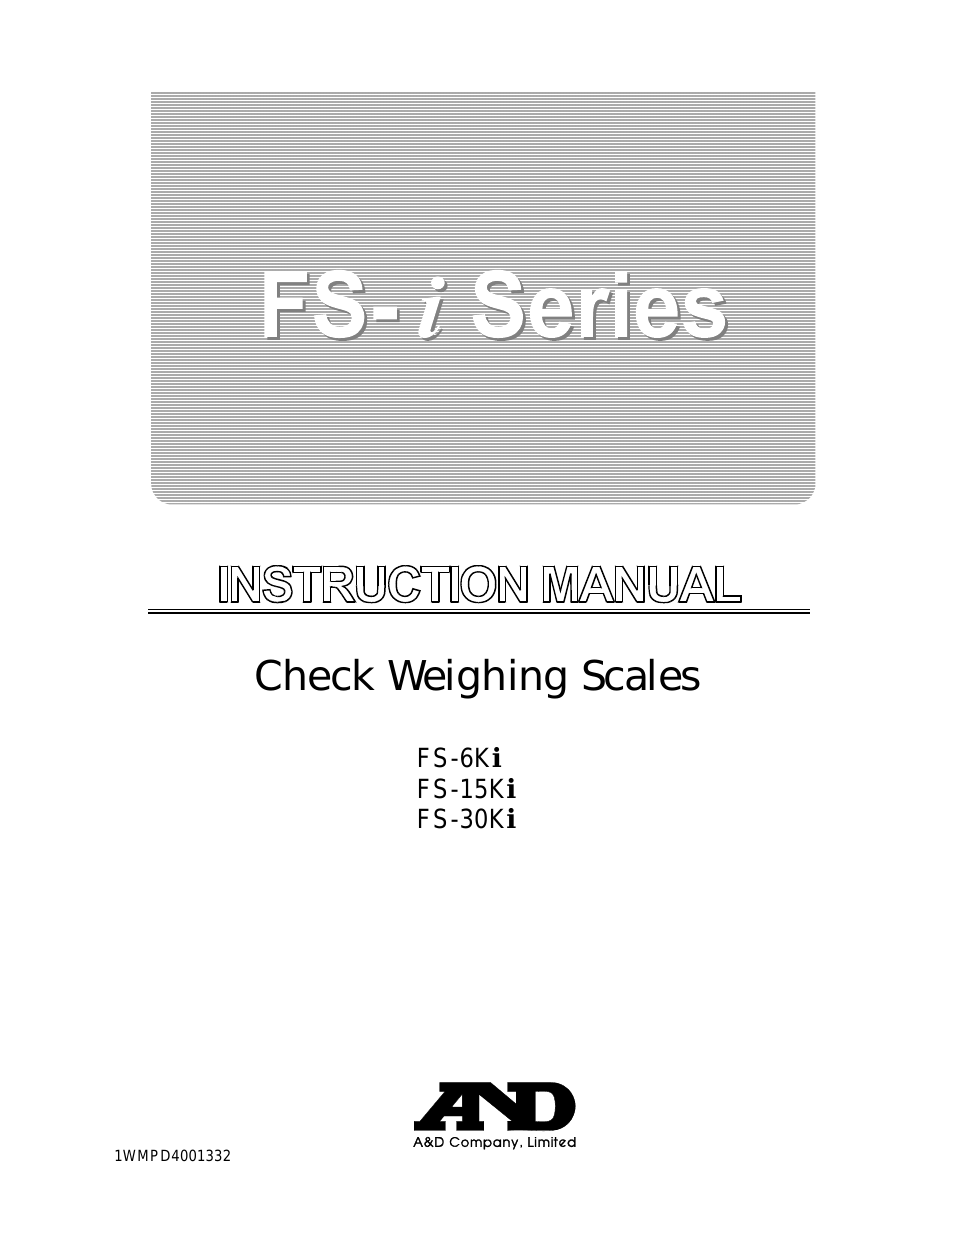 Check Weighing Scales FS-15Ki